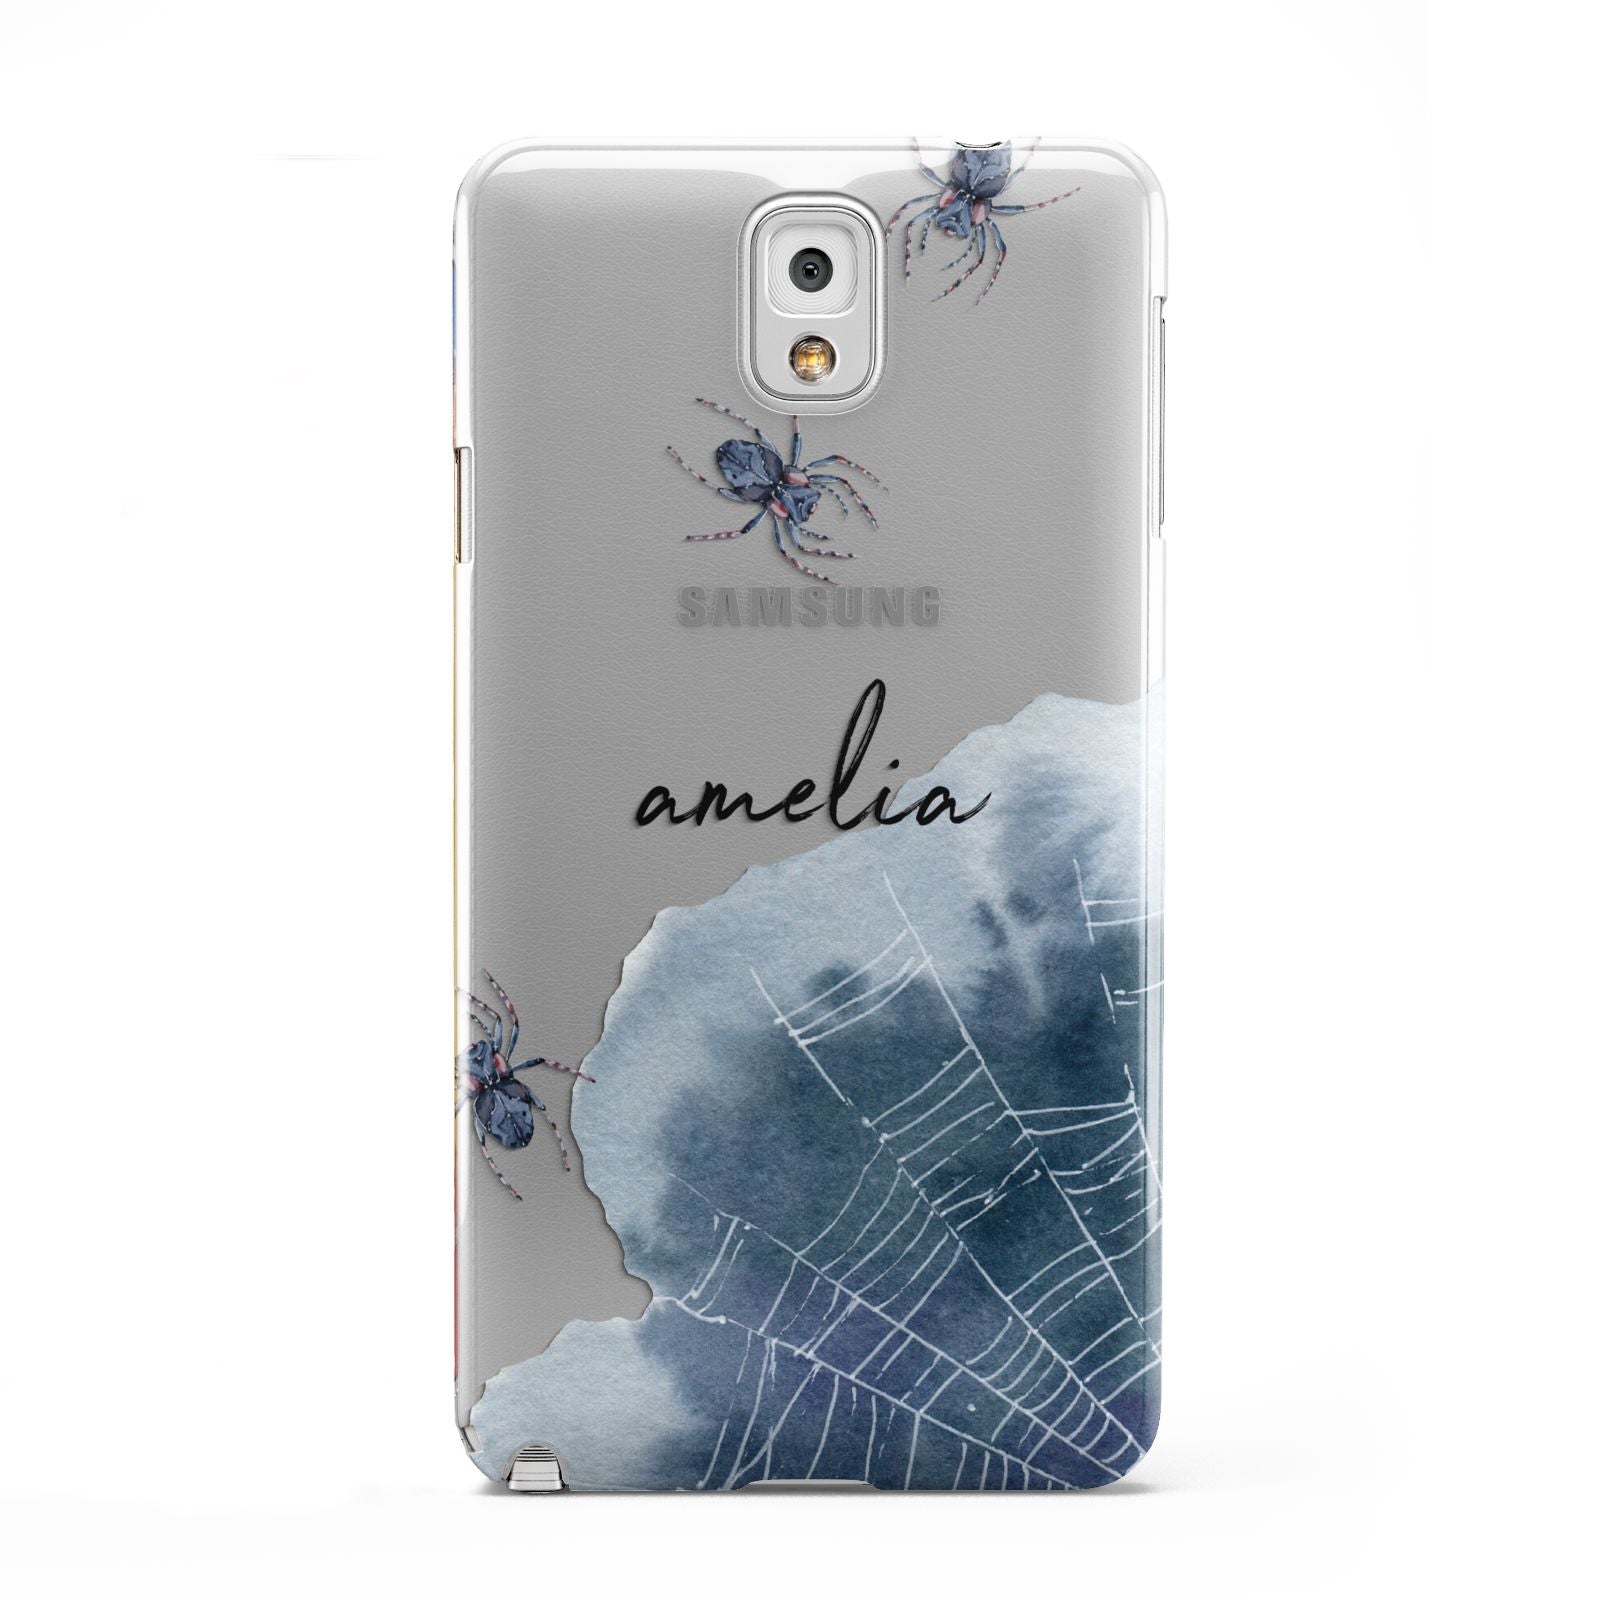 Personalised Halloween Spider Web Samsung Galaxy Note 3 Case